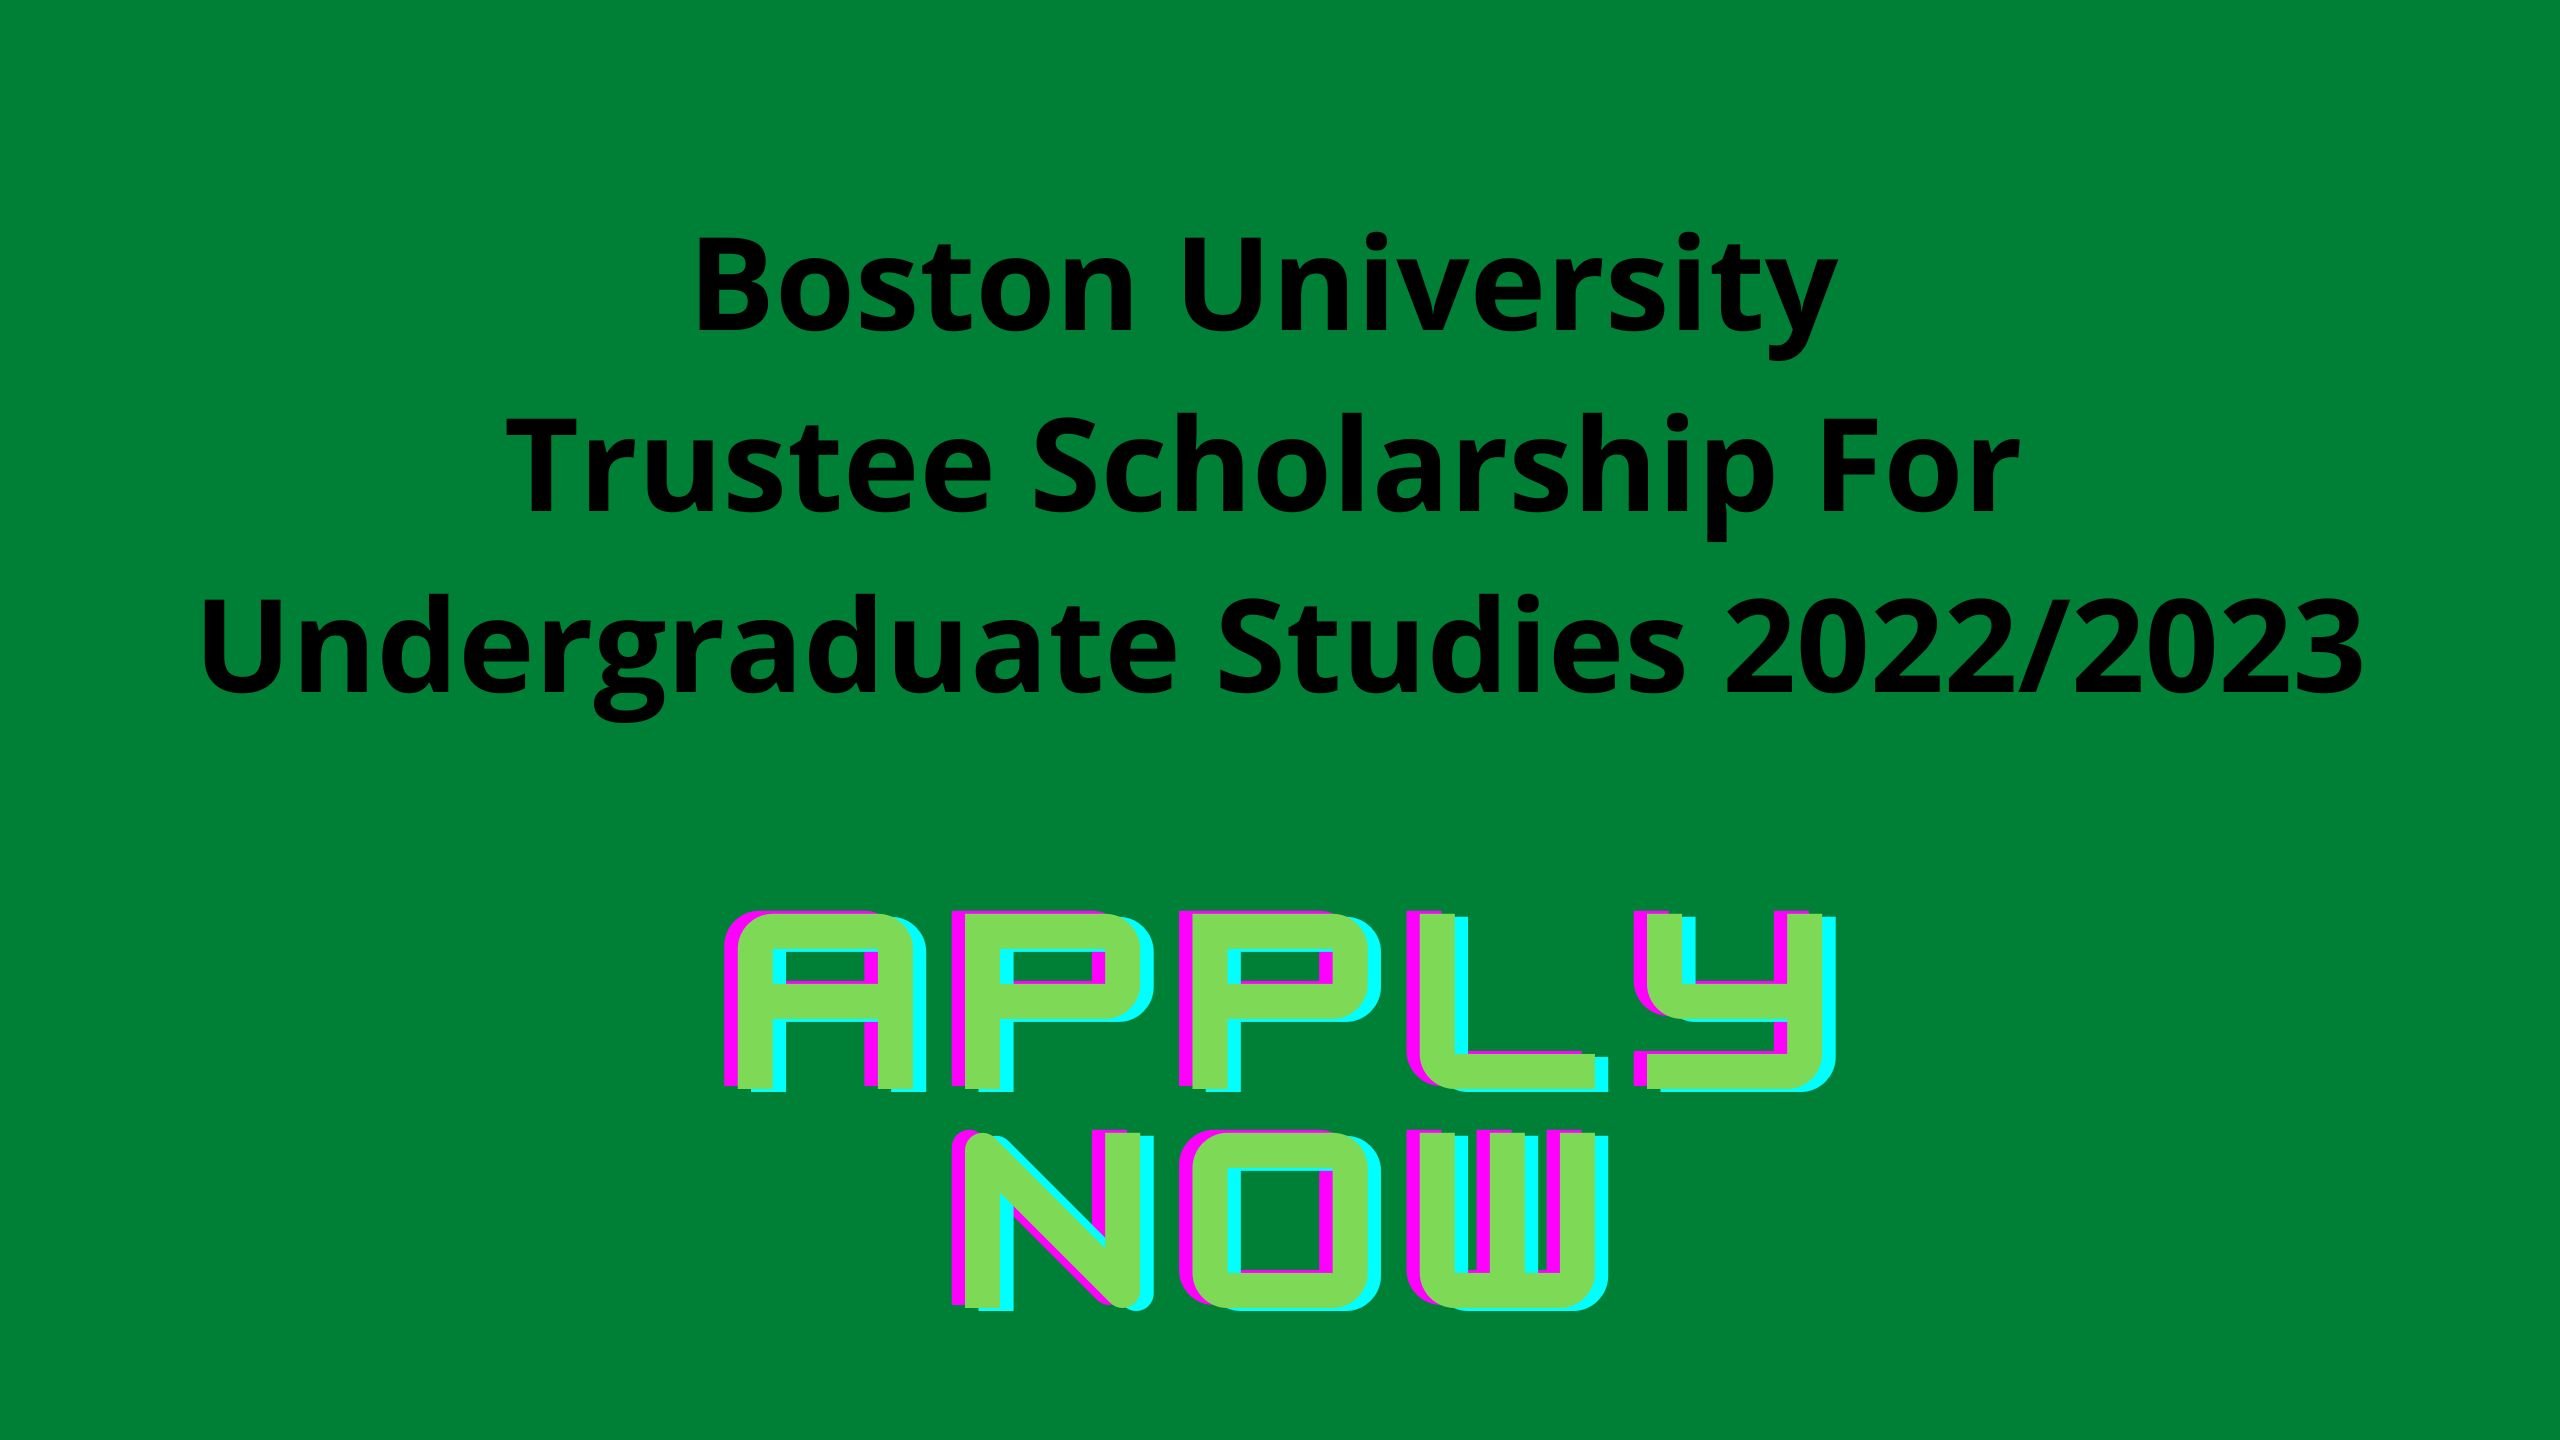 Boston University Trustee Scholarship For Undergraduate Studies 2022/2023 1 » Tech And Scholarship Updates